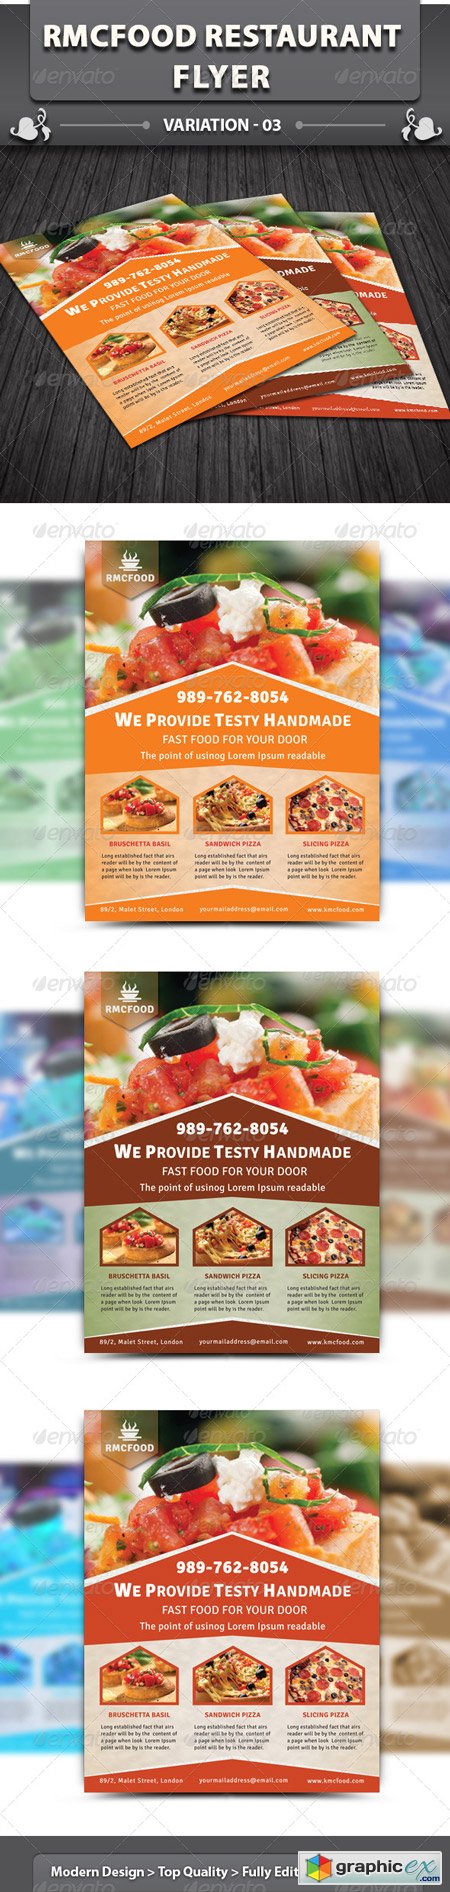 RMC Food Restaurant Flyer